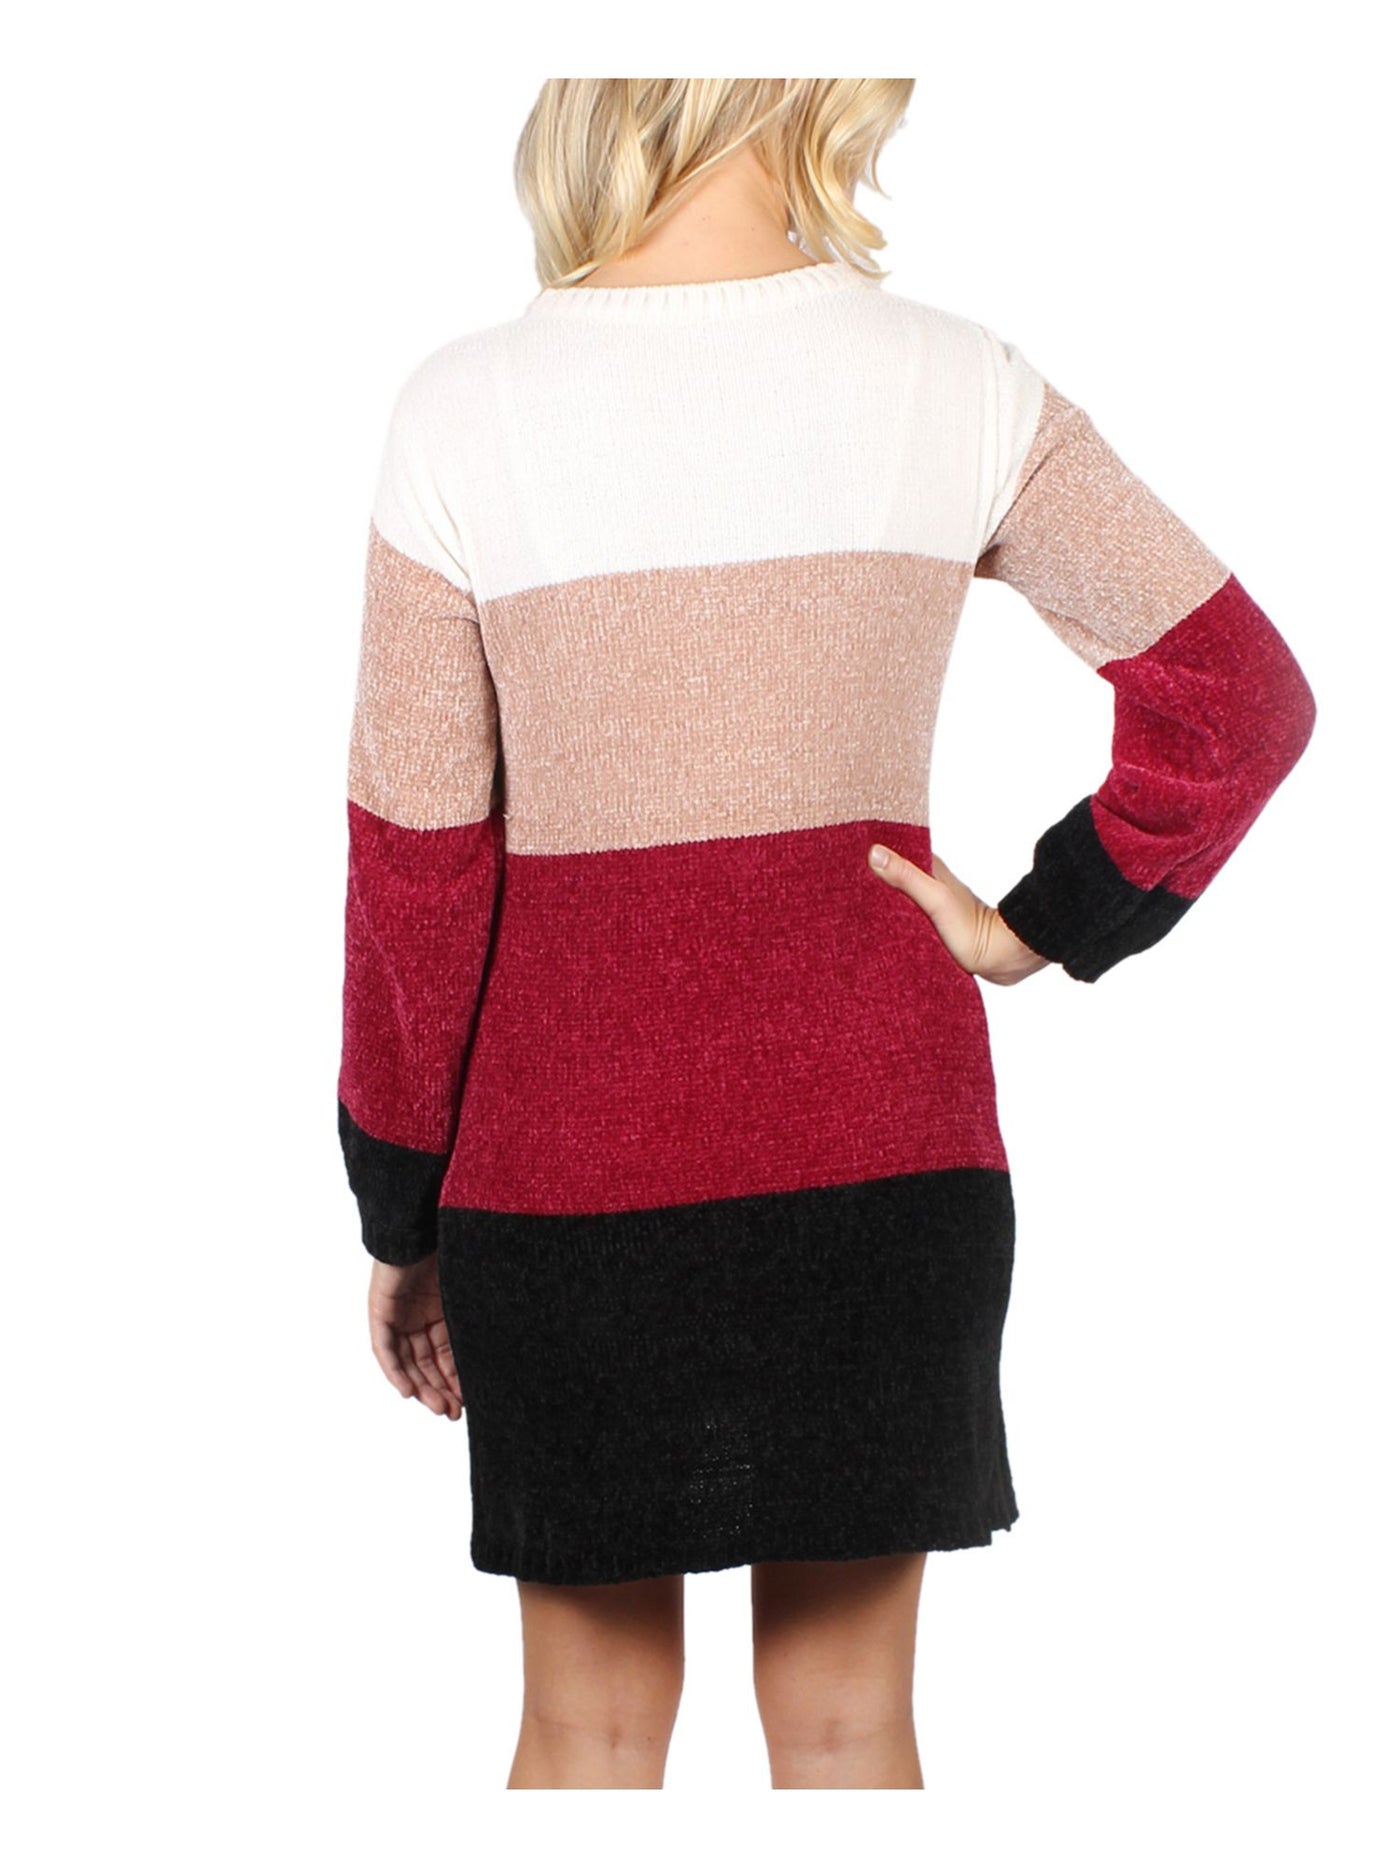 CRYSTAL DOLLS Womens Burgundy Color Block Long Sleeve Jewel Neck Above The Knee Sheath Dress Juniors S